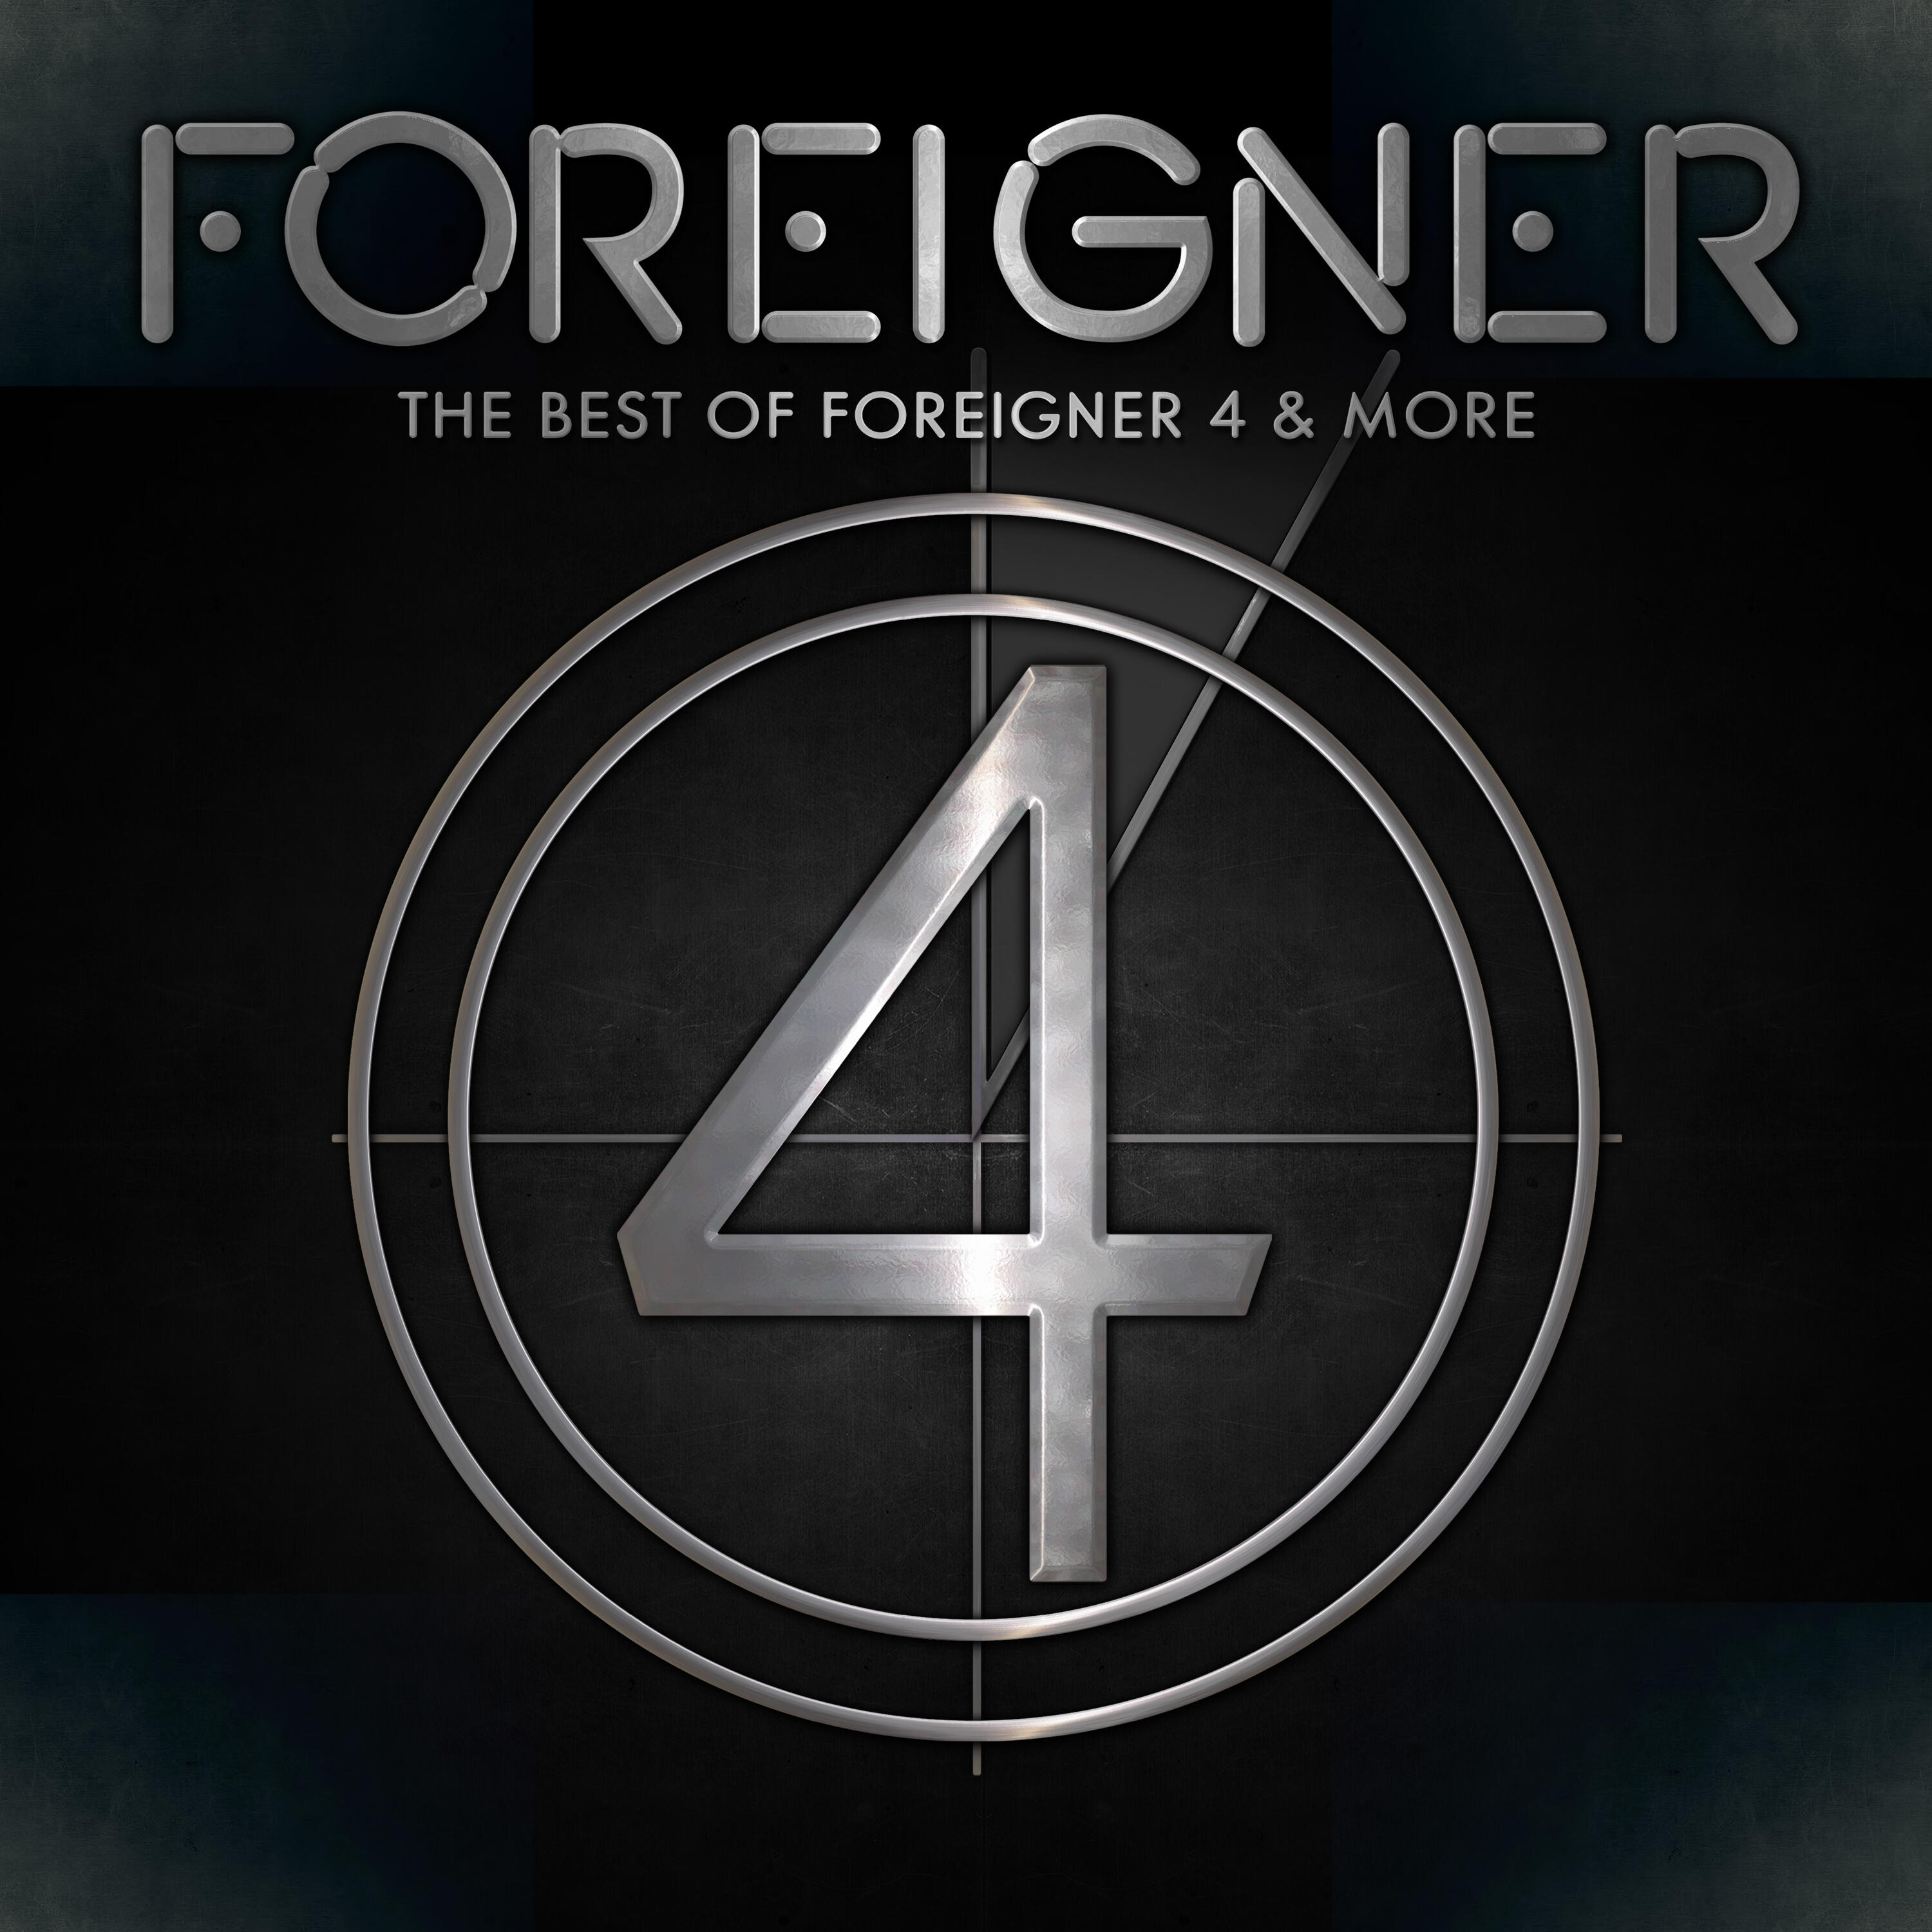 foreigner 4 tour dates